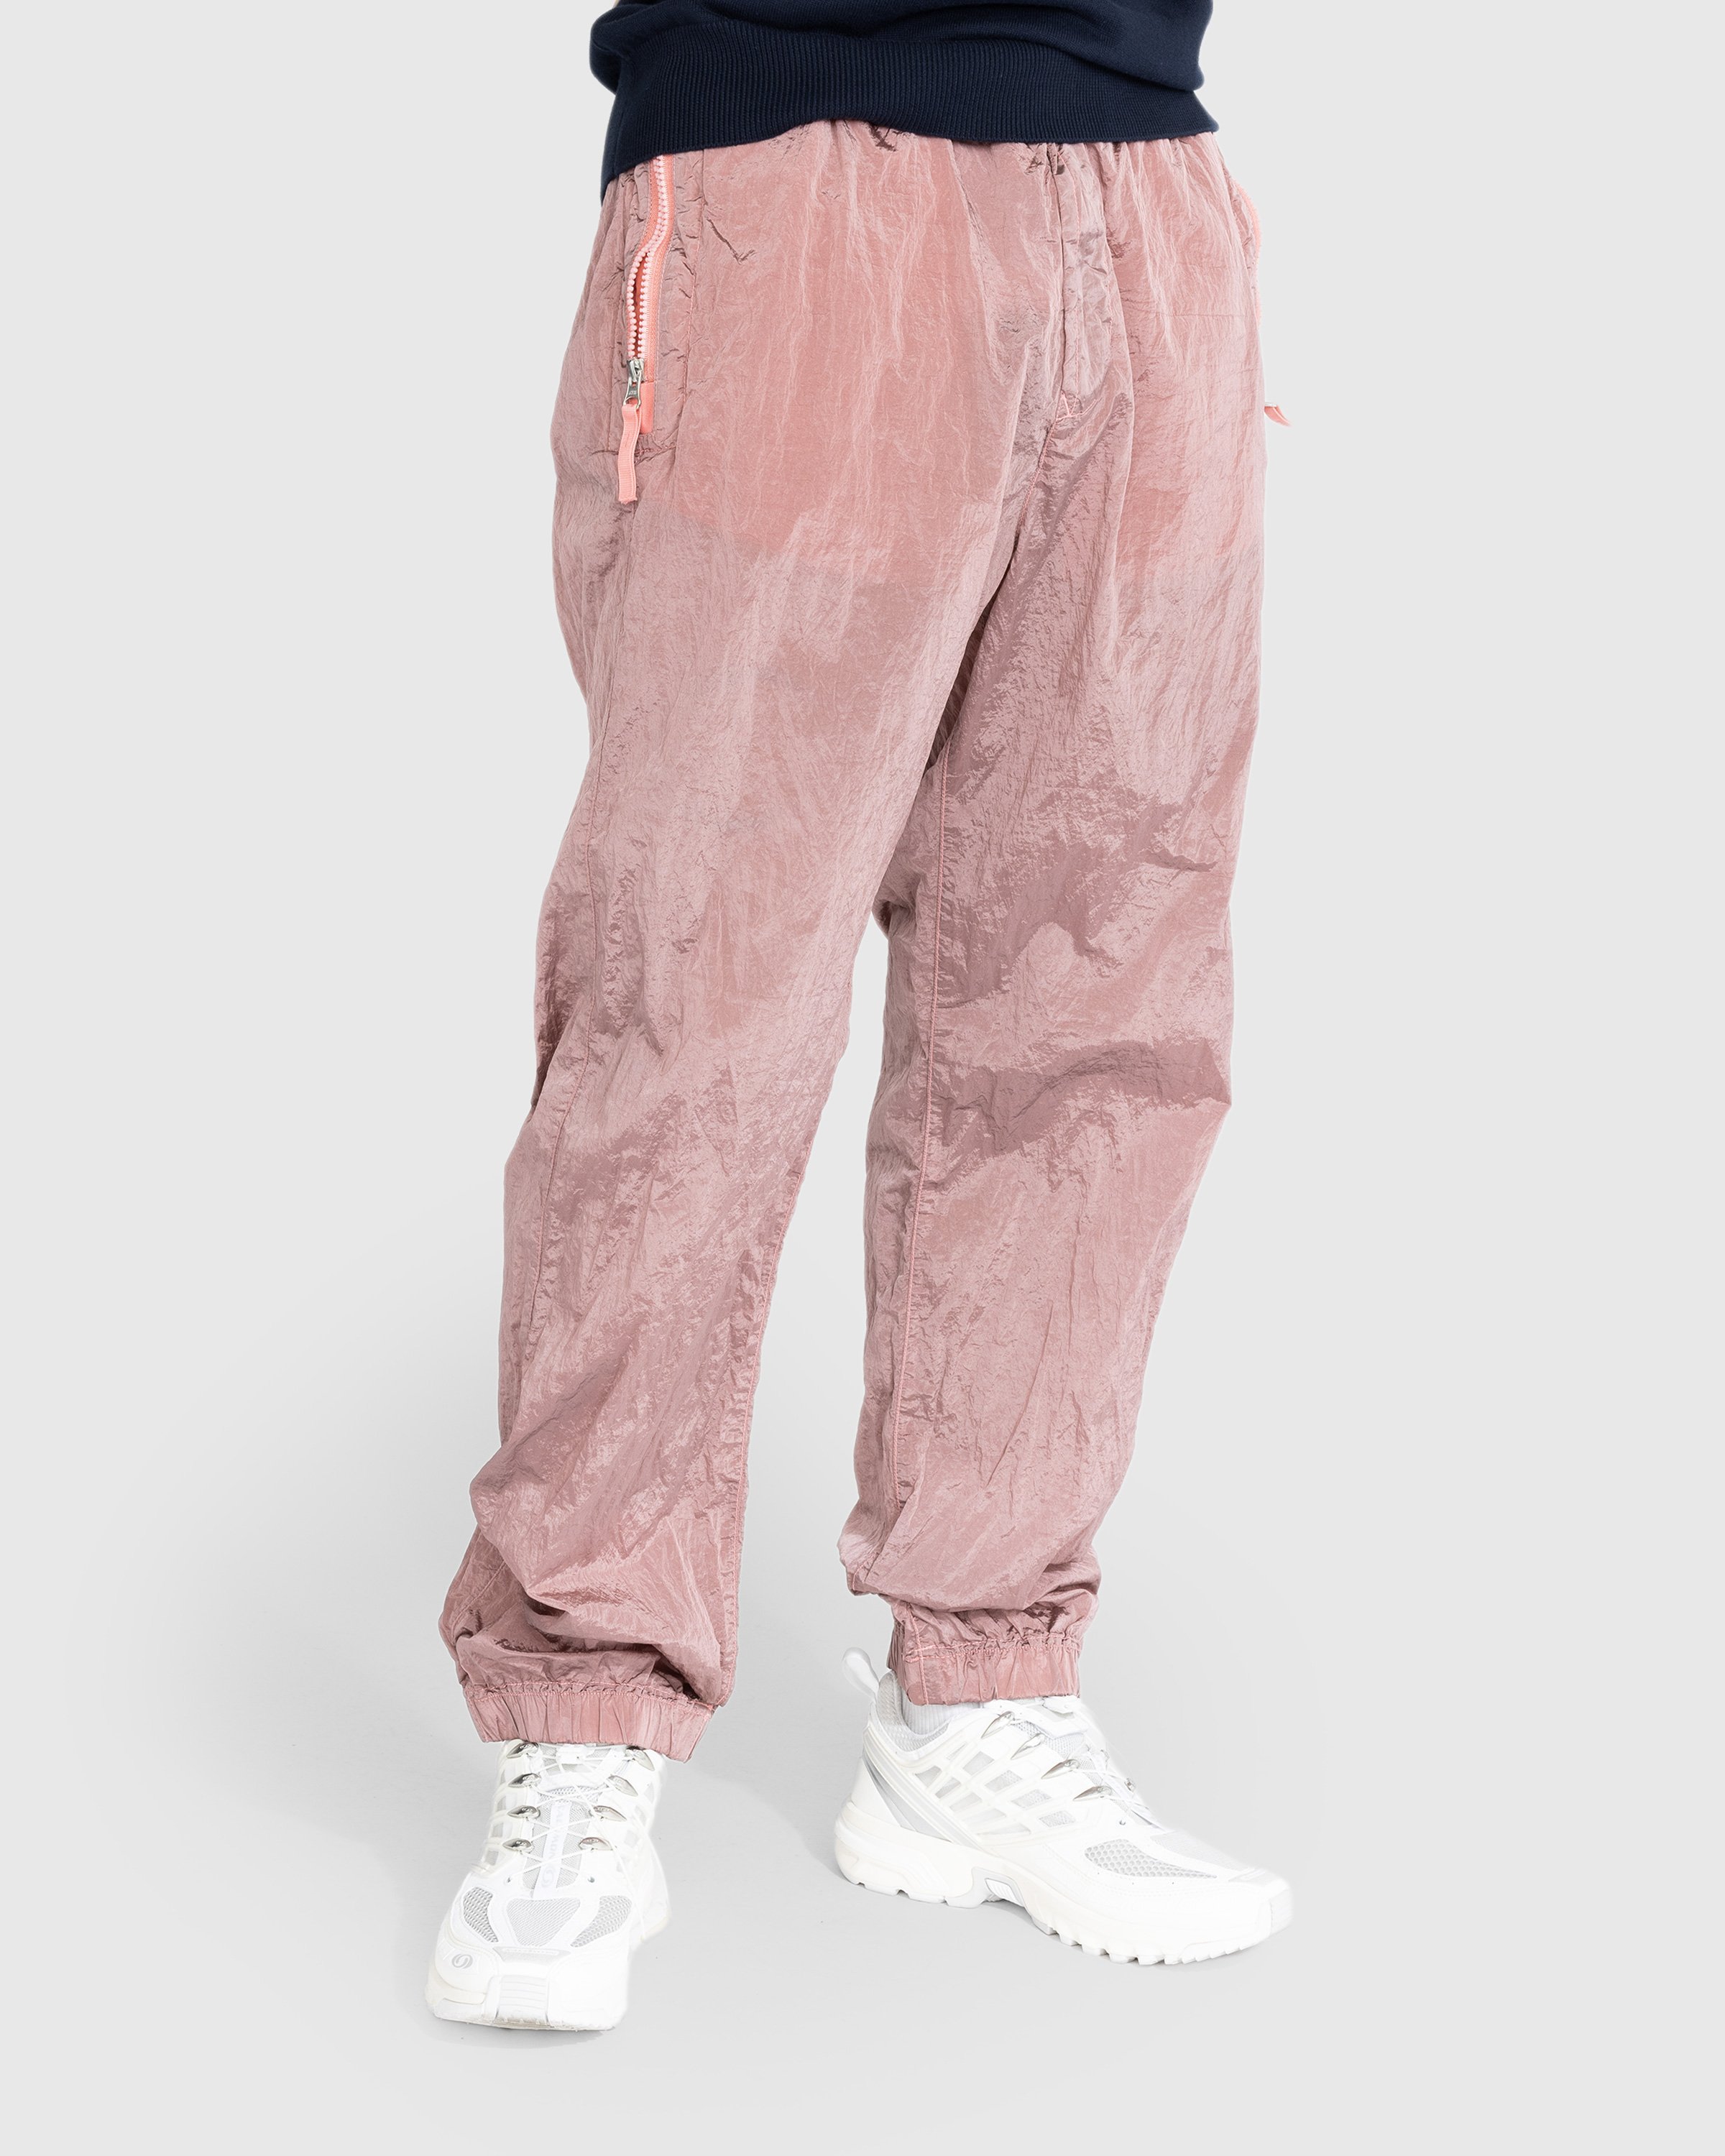 Stone Island - Pantalone Loose Pink 31019 - Clothing - Pink - Image 2